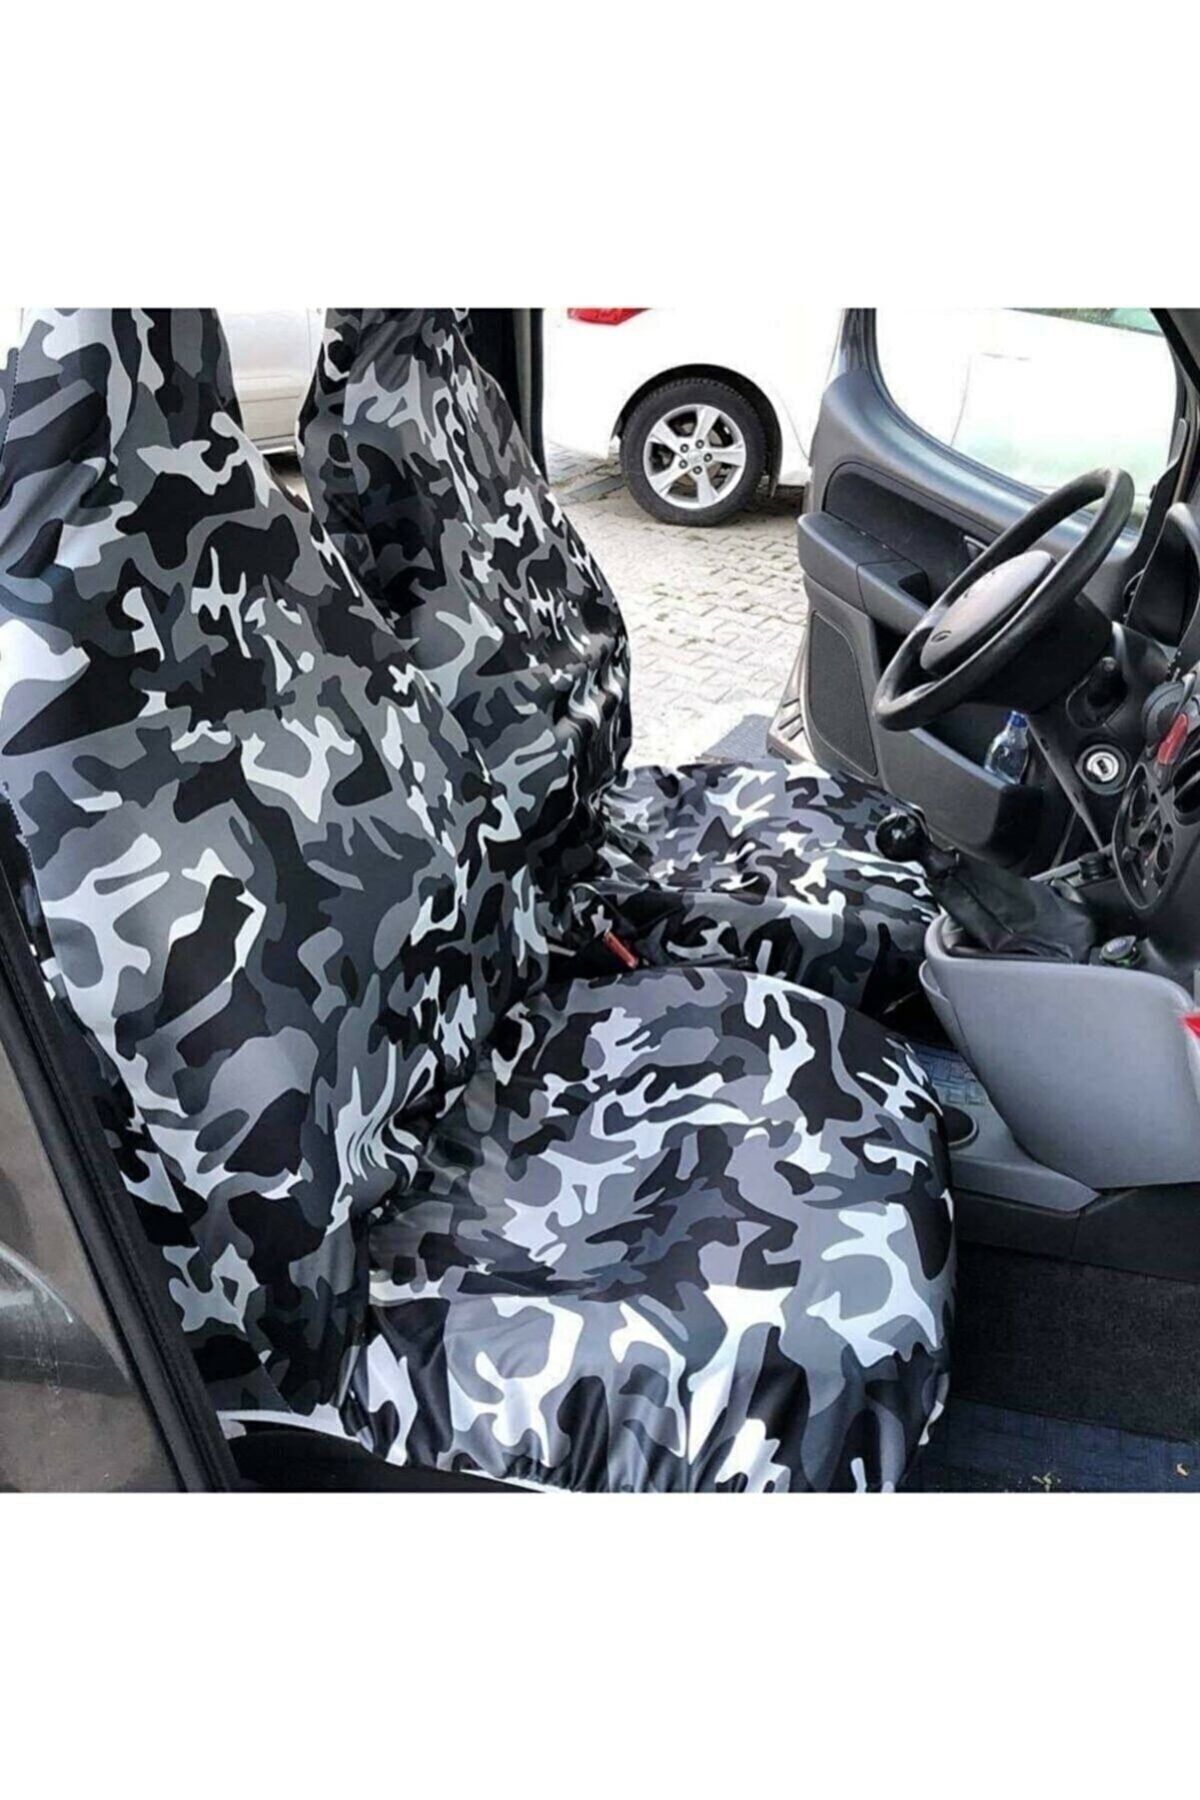 Fiat Brava Likralı Penye 4 Parça Siyah Gri Kamuflaj Servis Kılıfı Seti Uyumlu